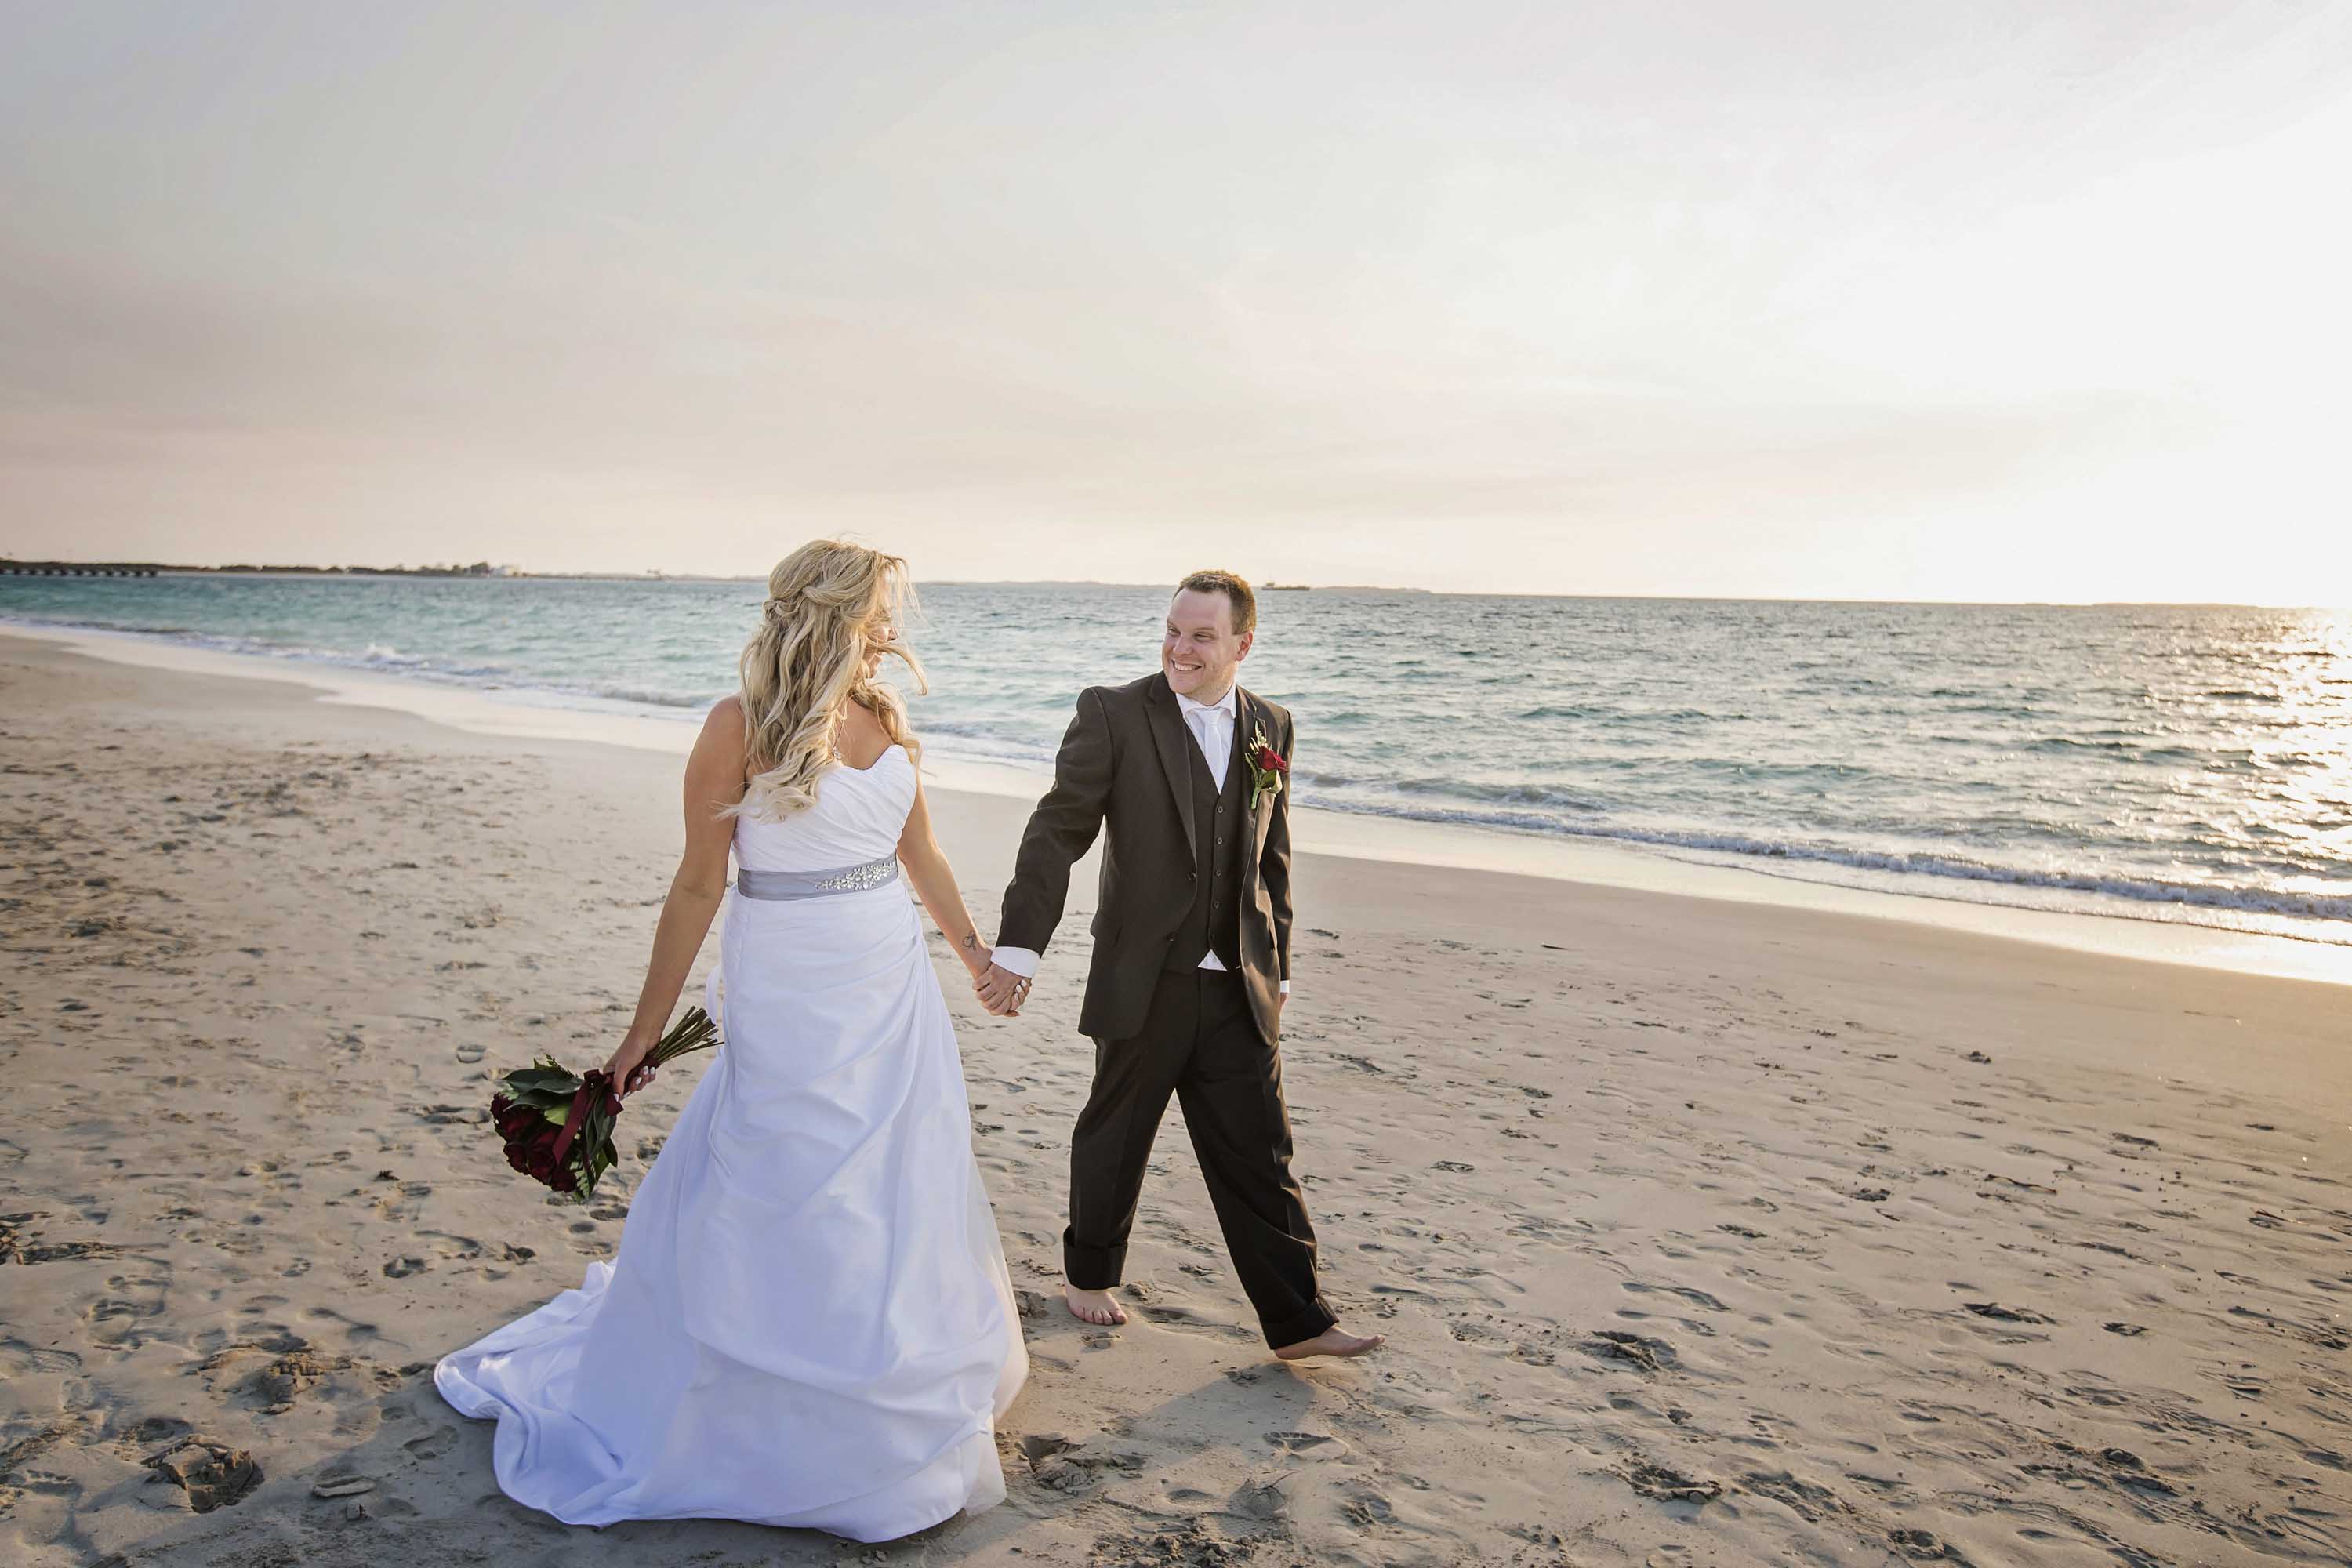 Bride and groom walking on beach outside Coogee beach life saving club